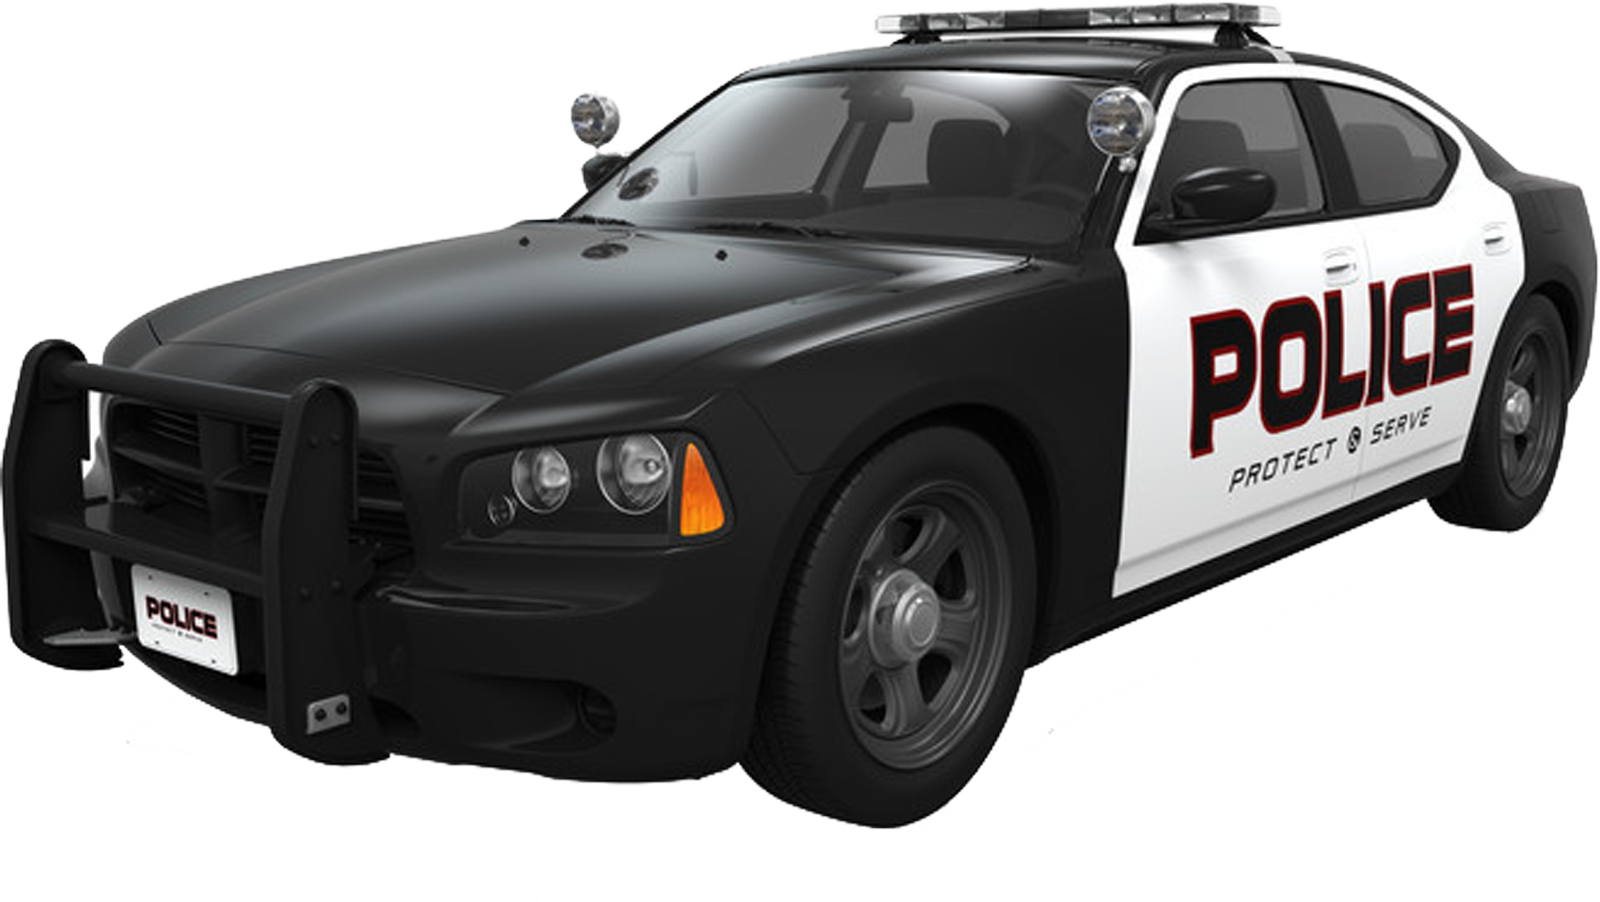 police officer car